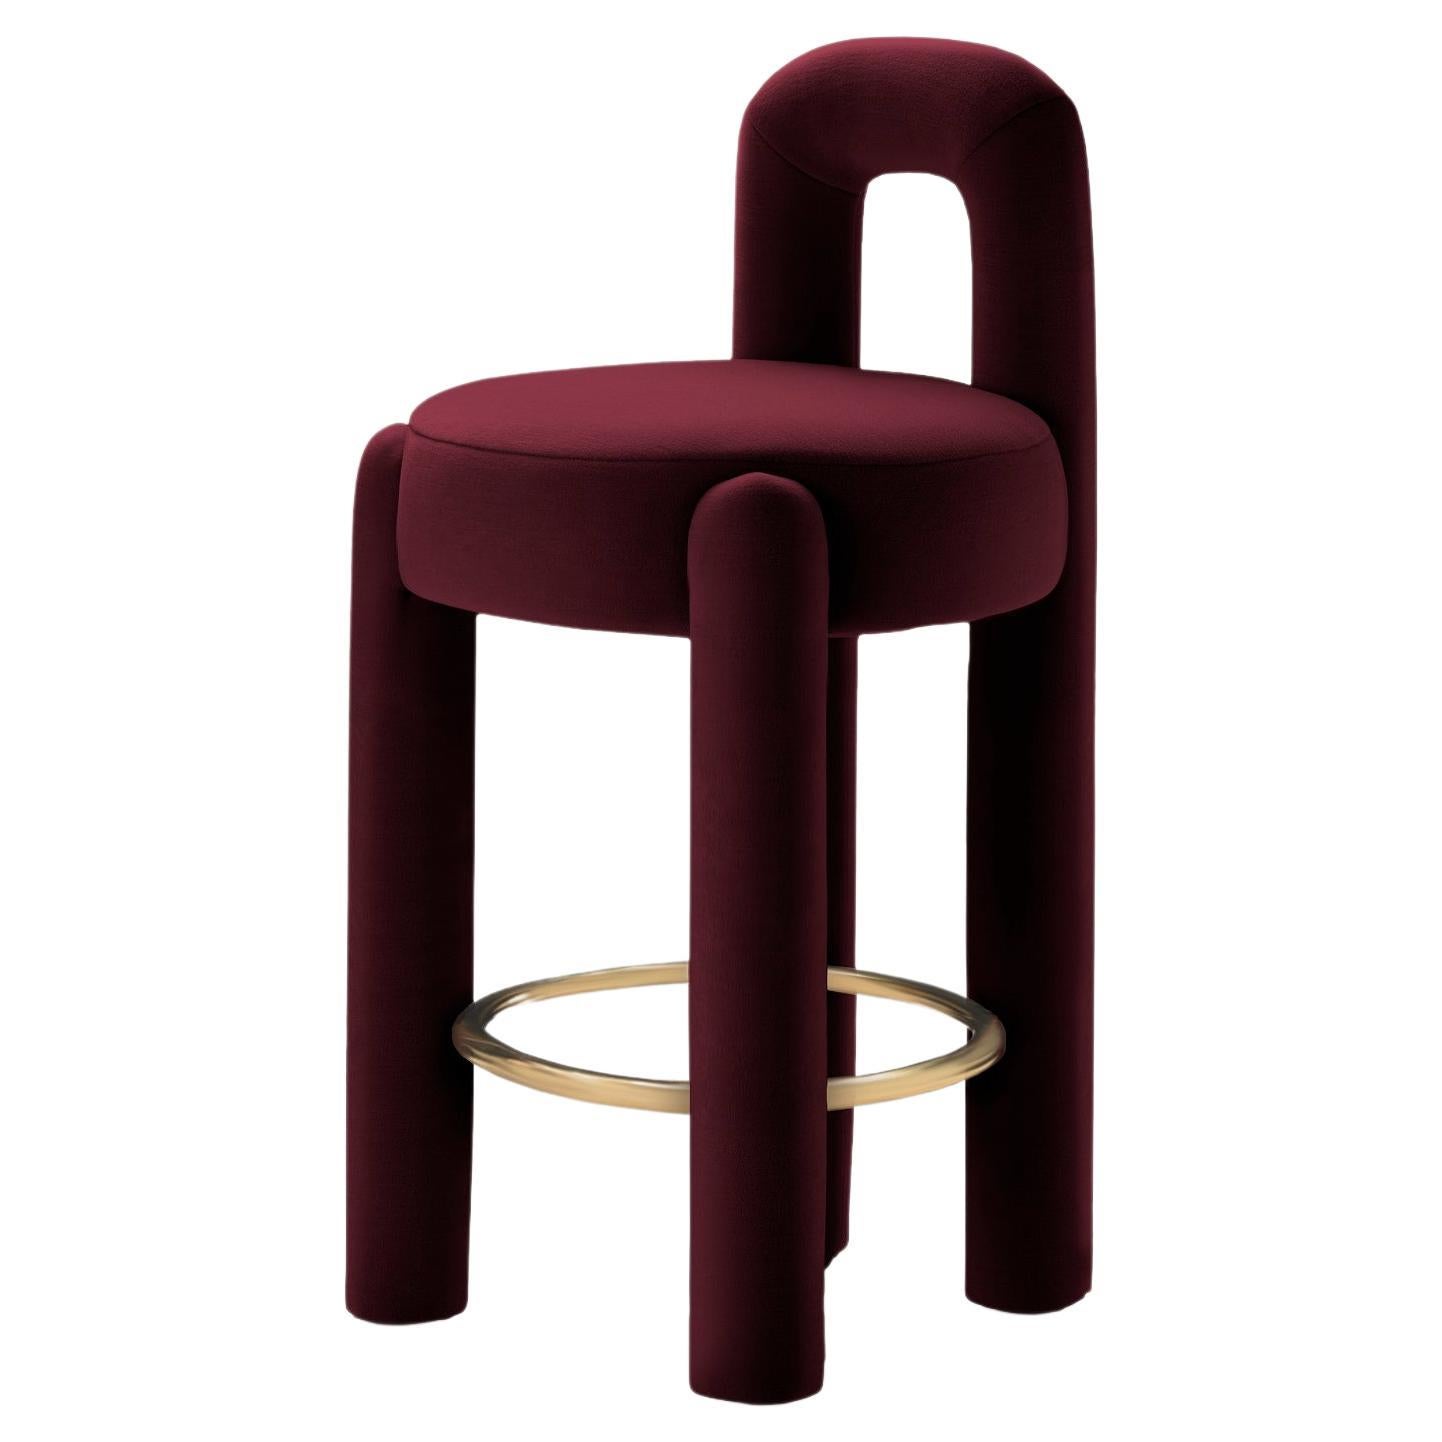 DOOQ! Organic Modern Marlon Counter Chair in Wine Kvadrat by P. Franceschini For Sale